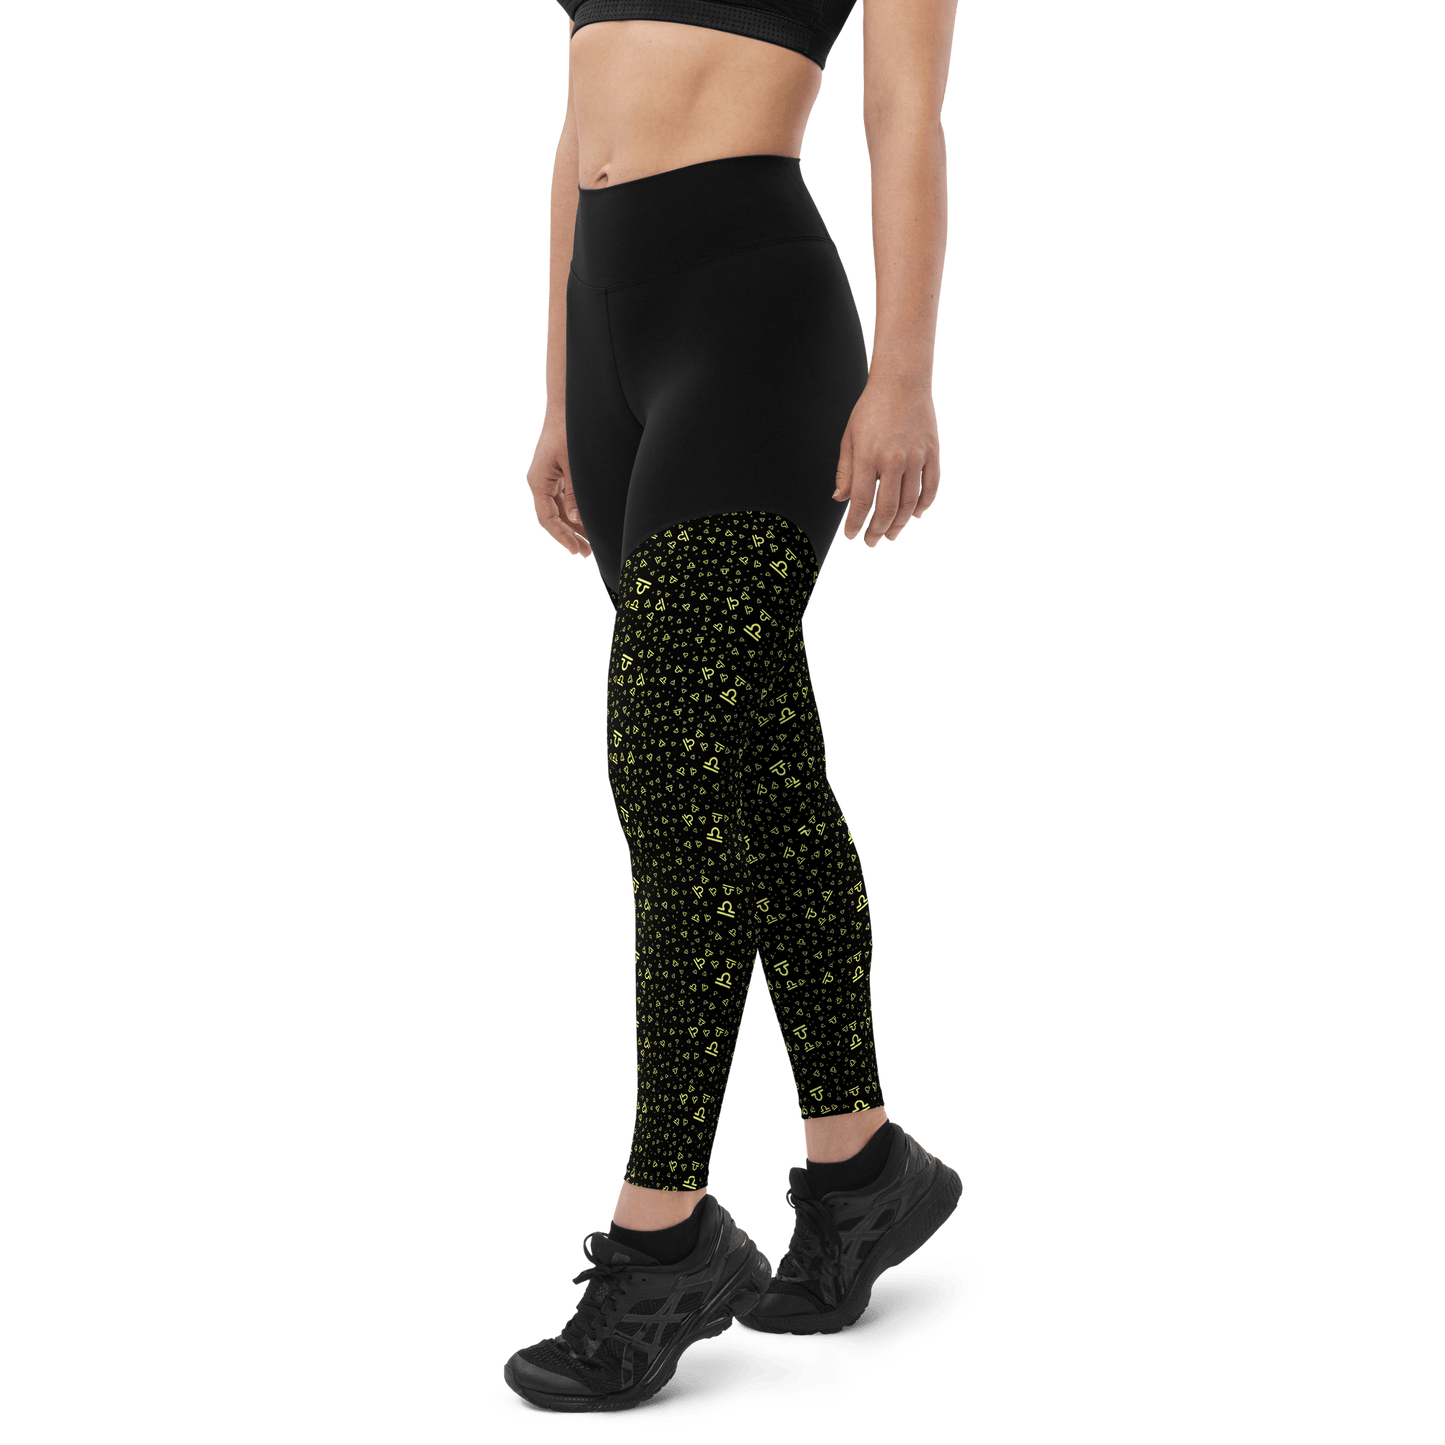 Zodiac Libra Black - Compression Sports Leggings - Sports Leggings - GYMLEGGS LLC